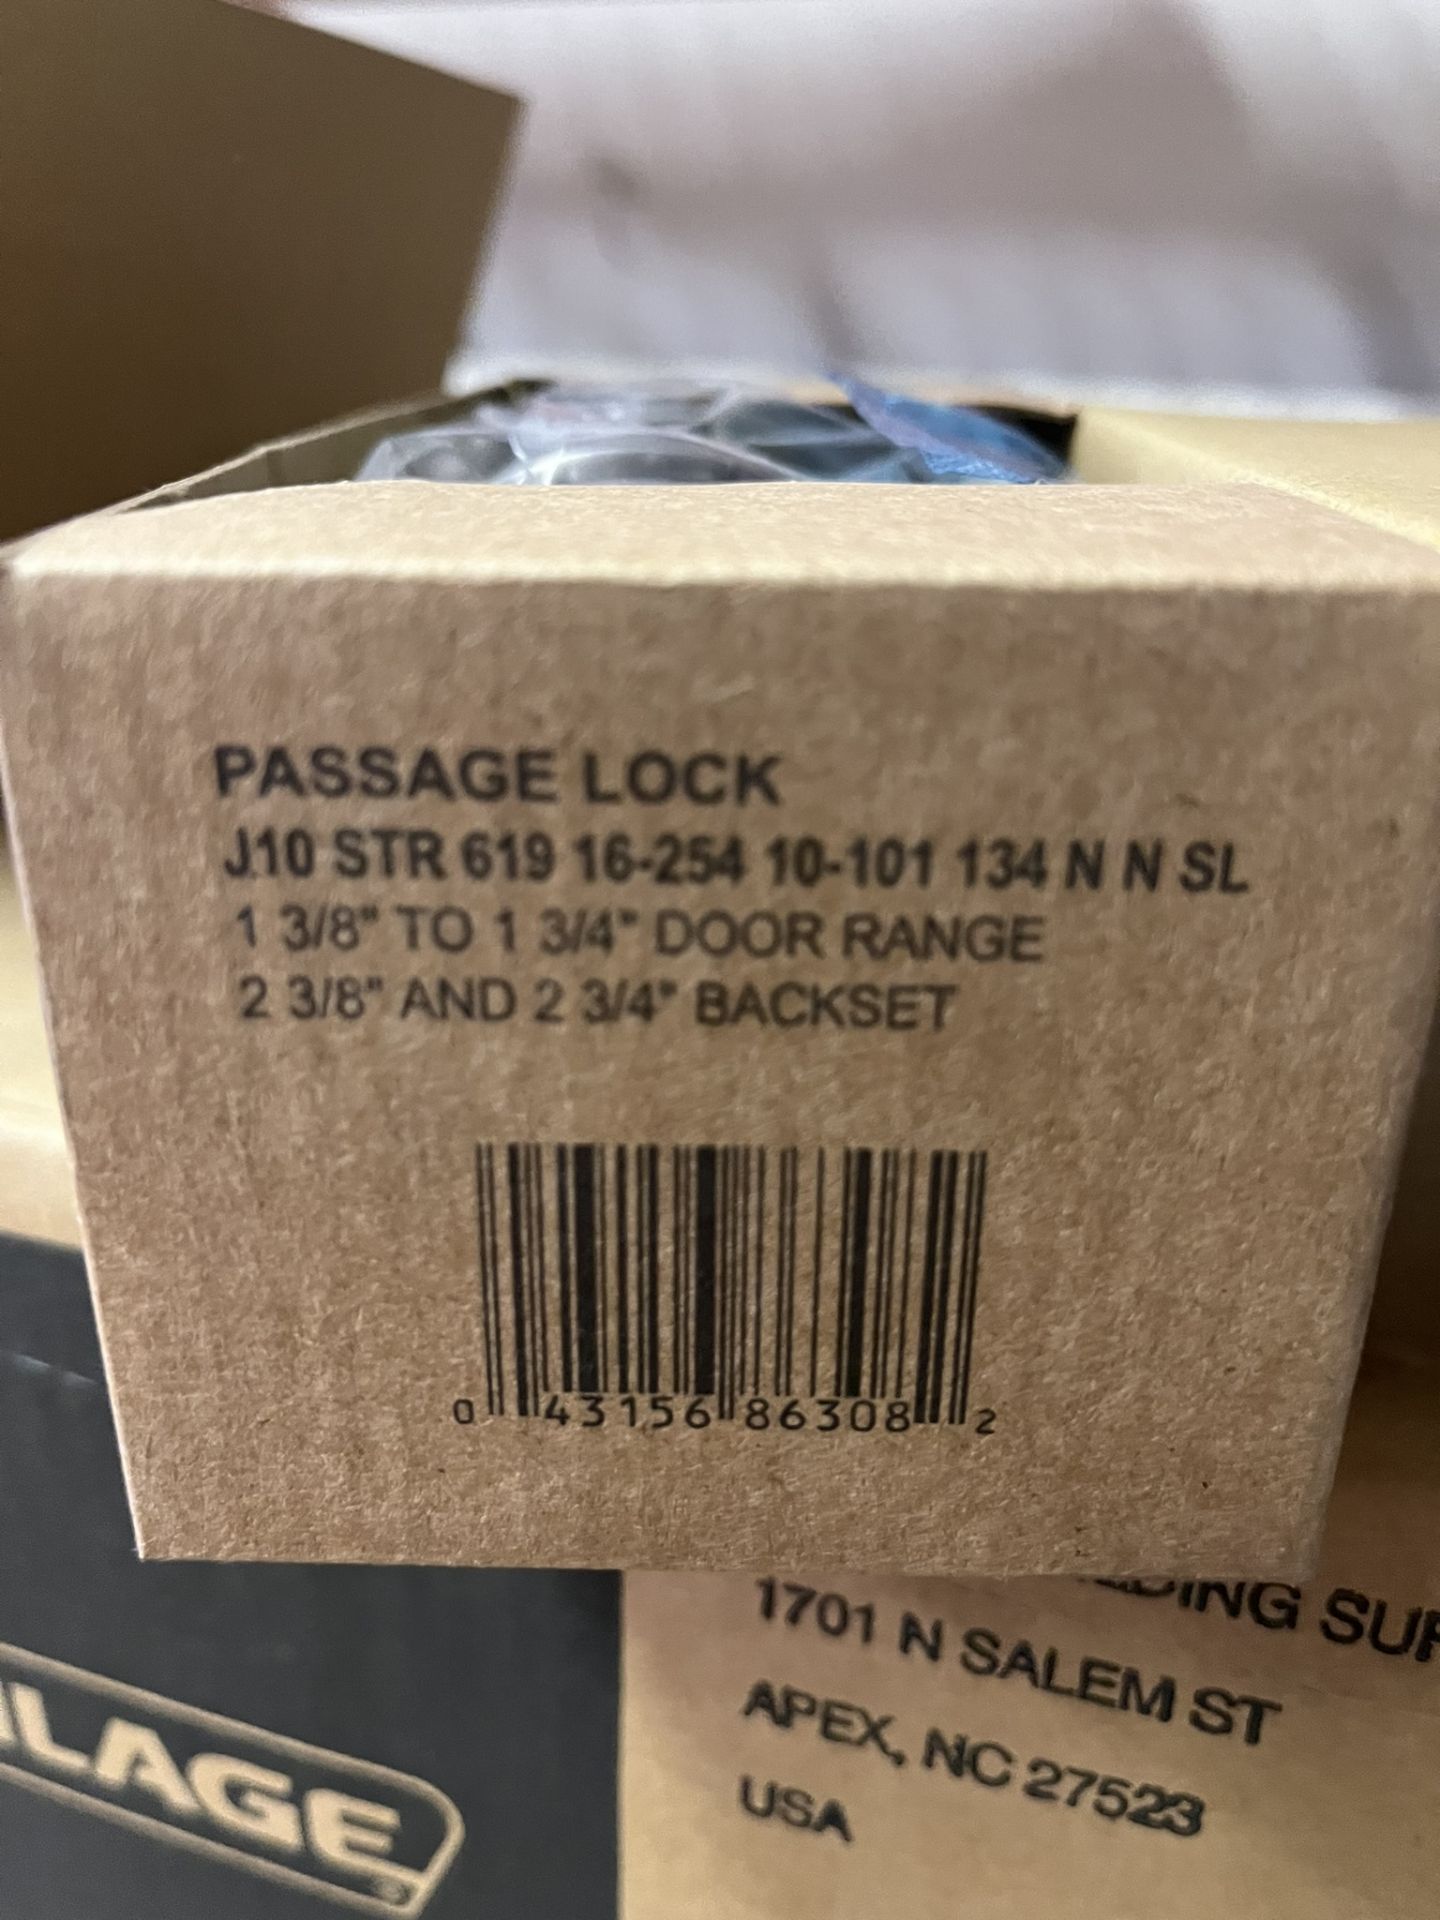 (24) SCHLAGE PASSAGE LOCKS 1 3/8" TO 1 3/4" DOOR RANGE; 2 3/8" AND 2 3/4" BACKSET - Image 3 of 3